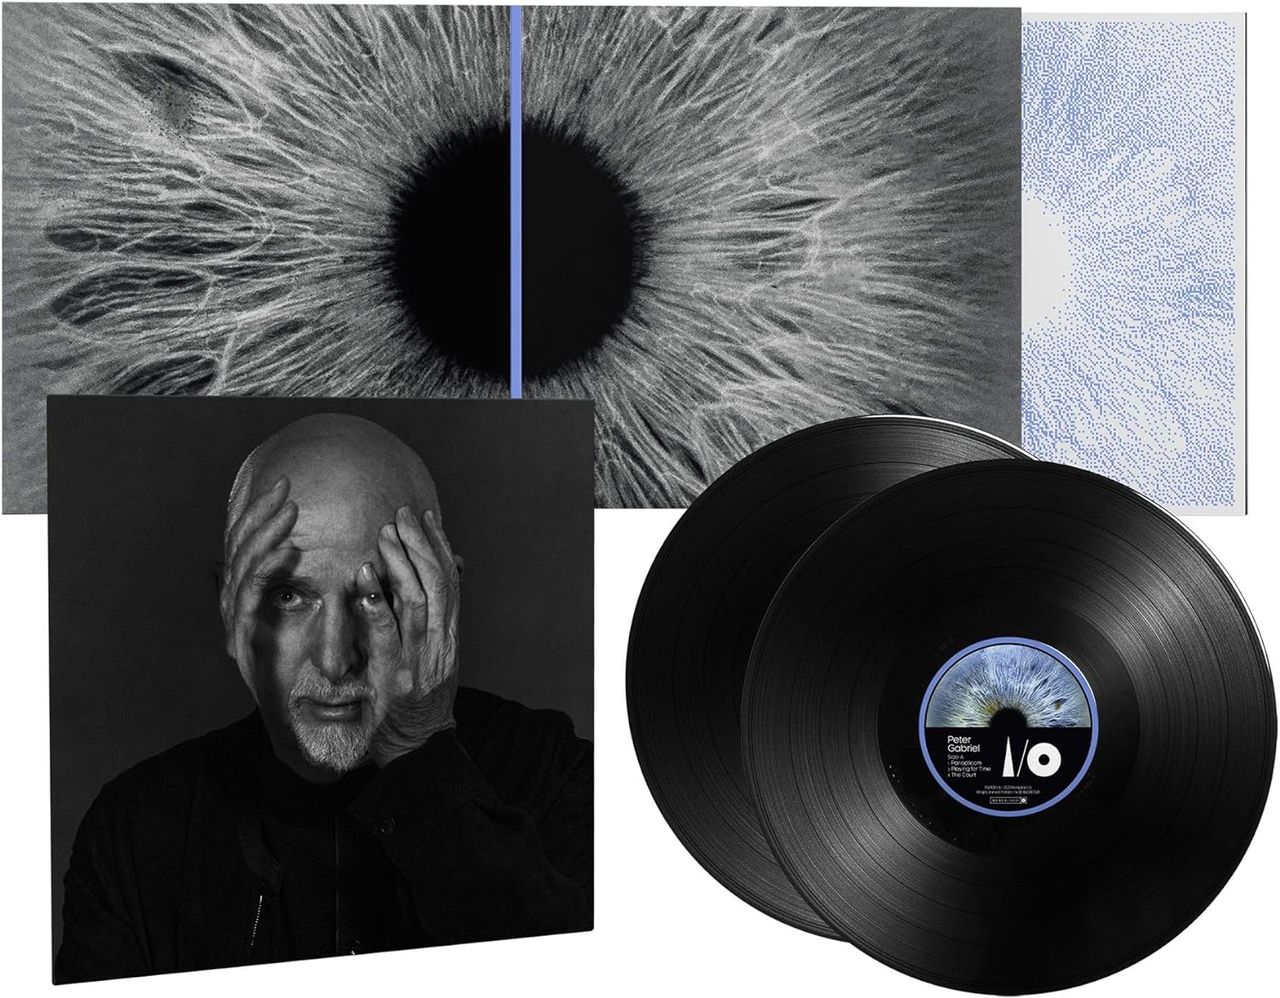 Peter Gabriel i/o Dark Side Mixes - Sealed UK 2-LP vinyl set